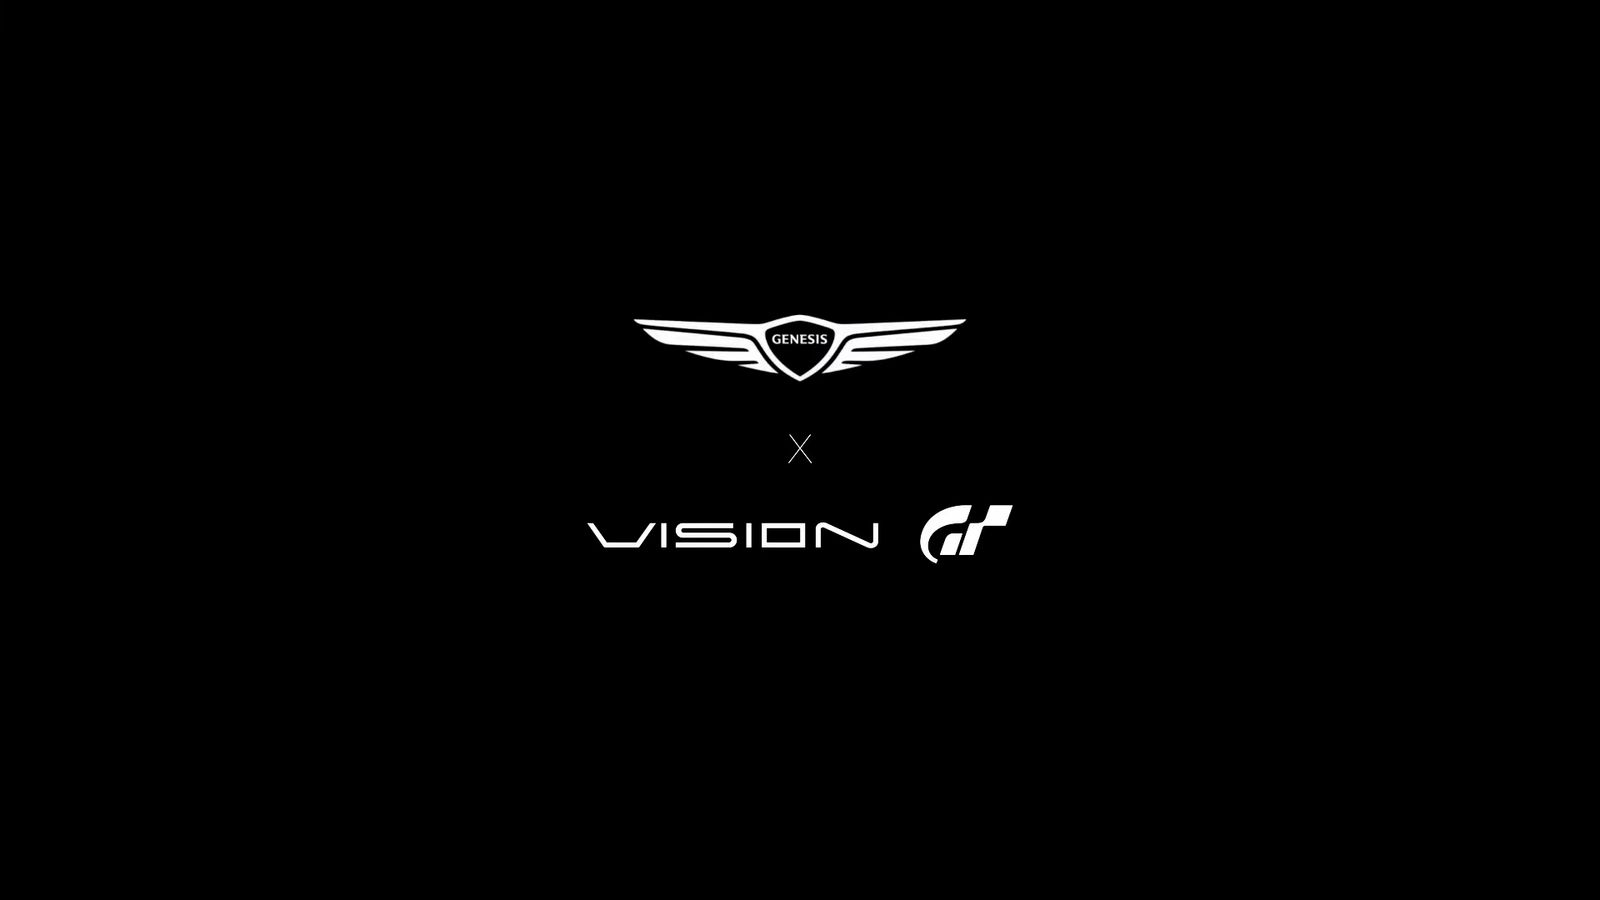 Genesis Vision Gran Turismo teaser